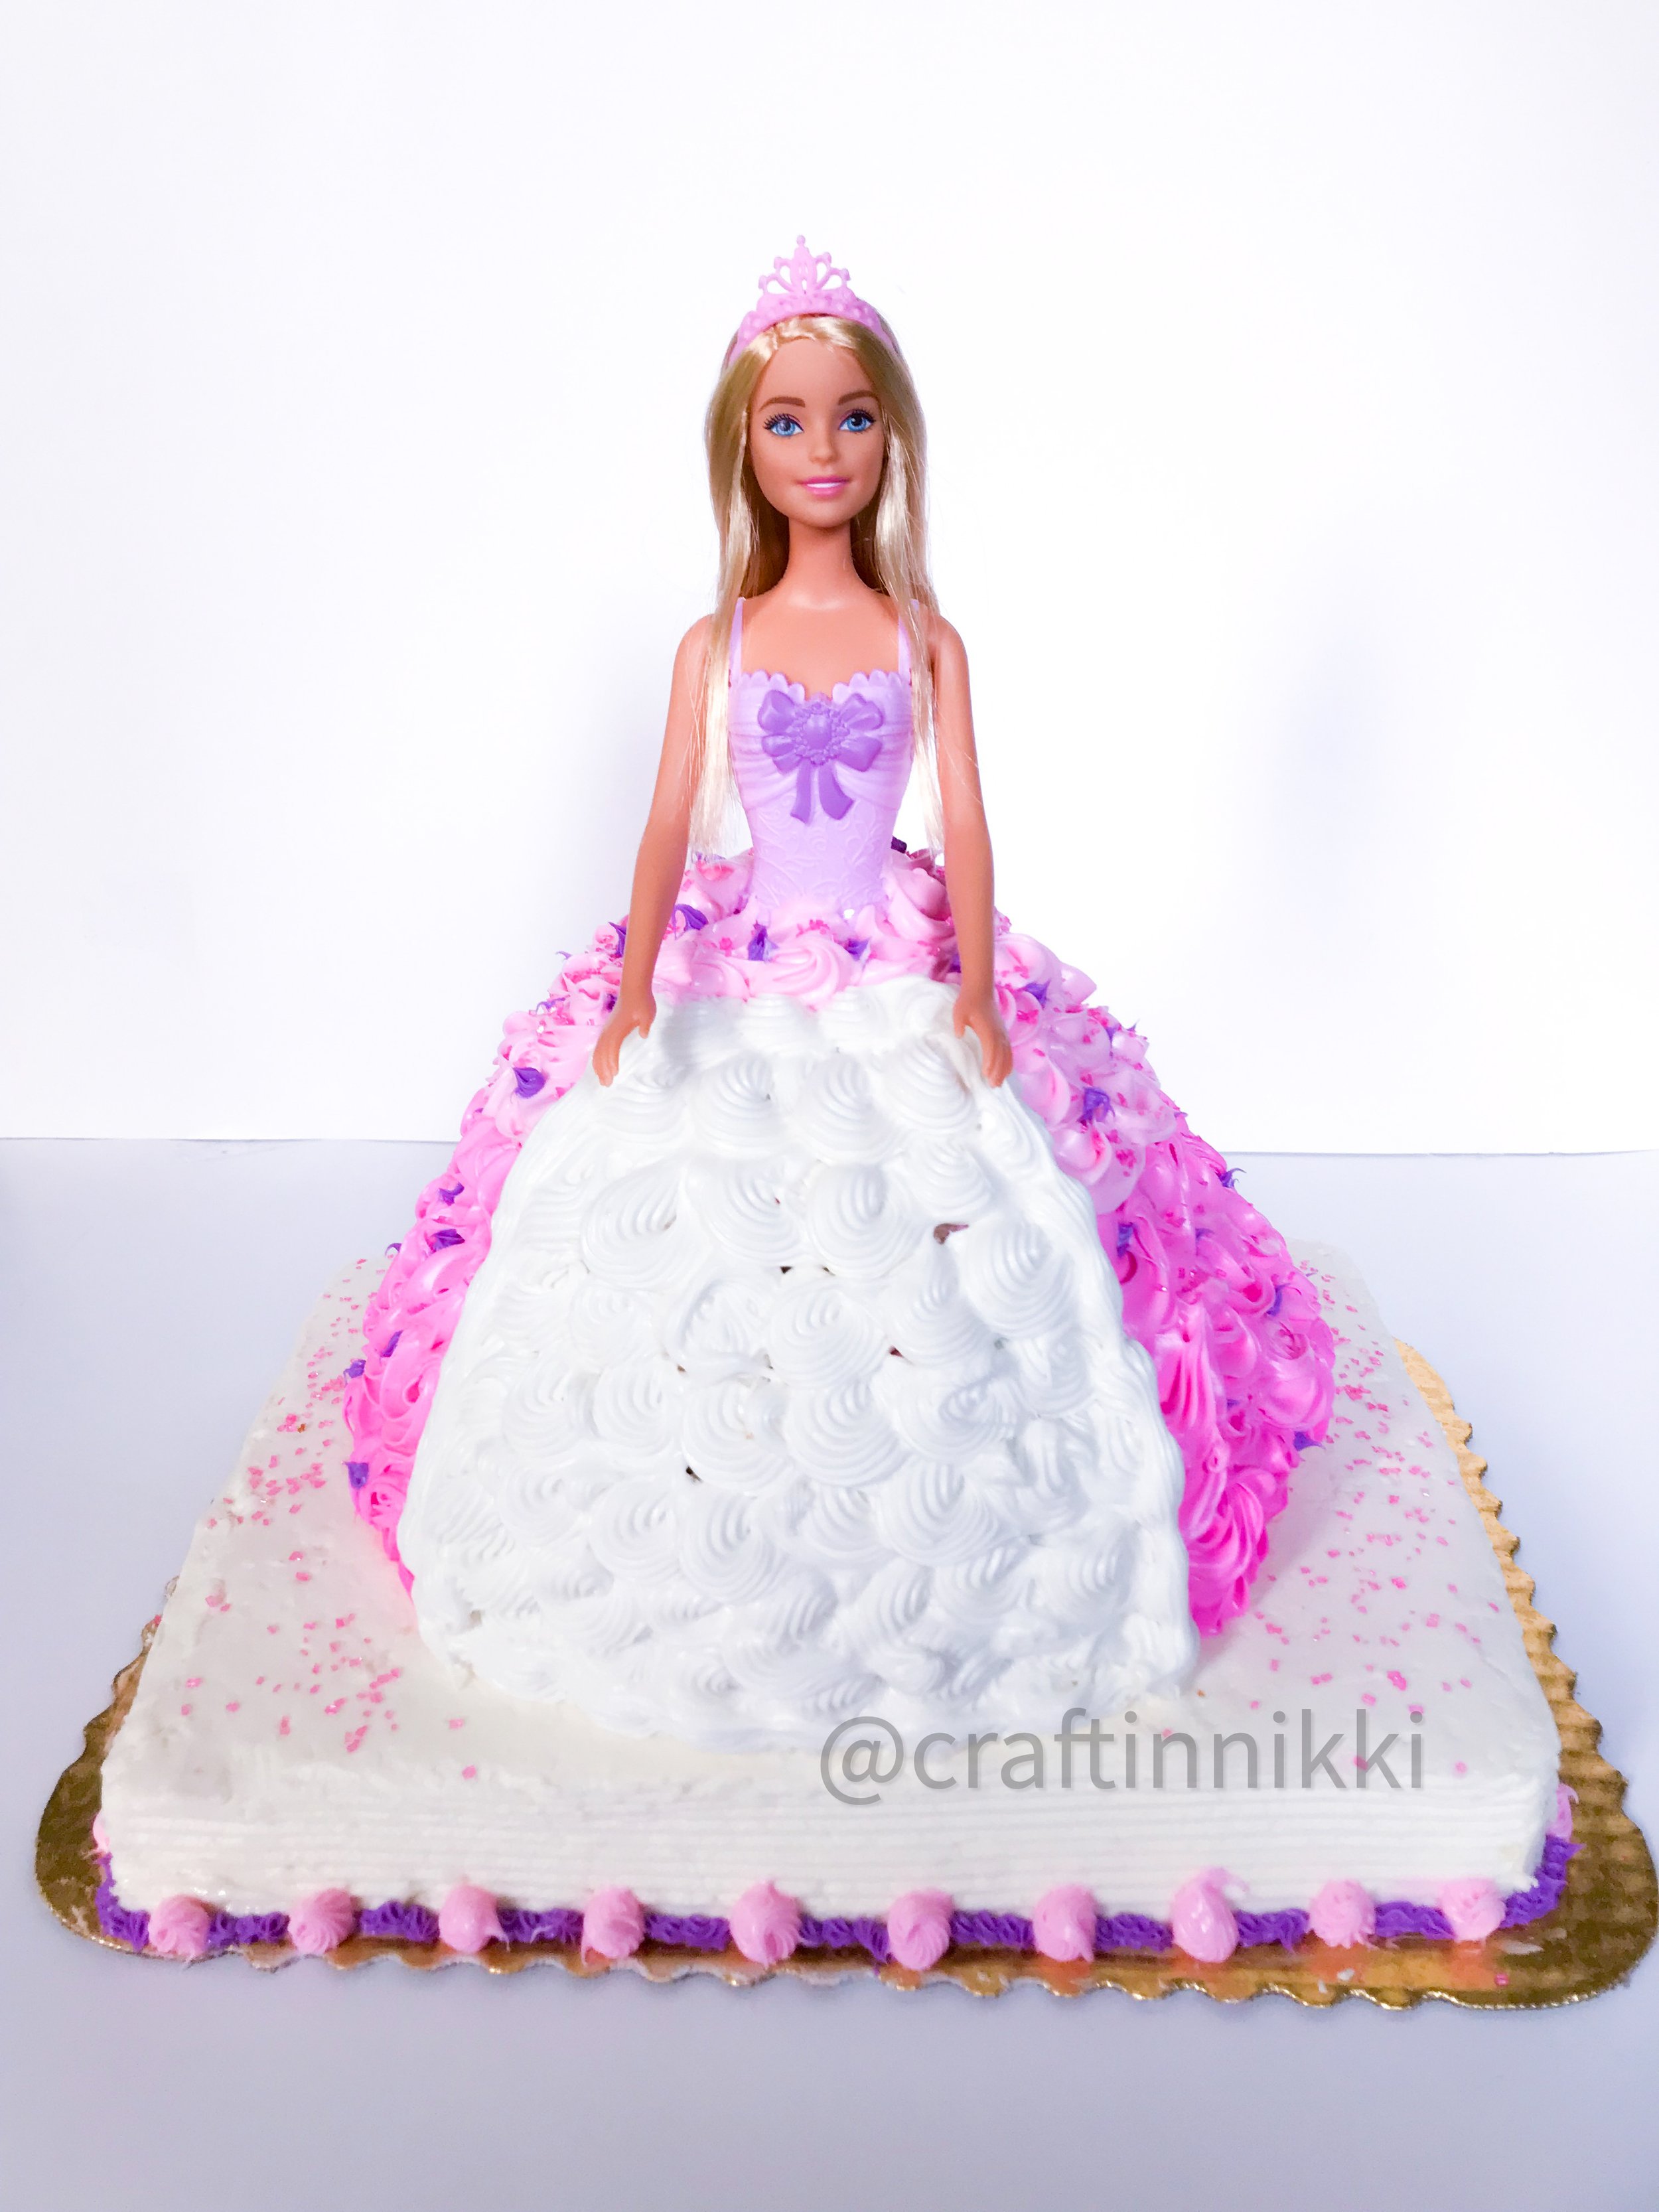 Craftin Nikki - DIY Barbie Cake Barbie Front-3.jpg